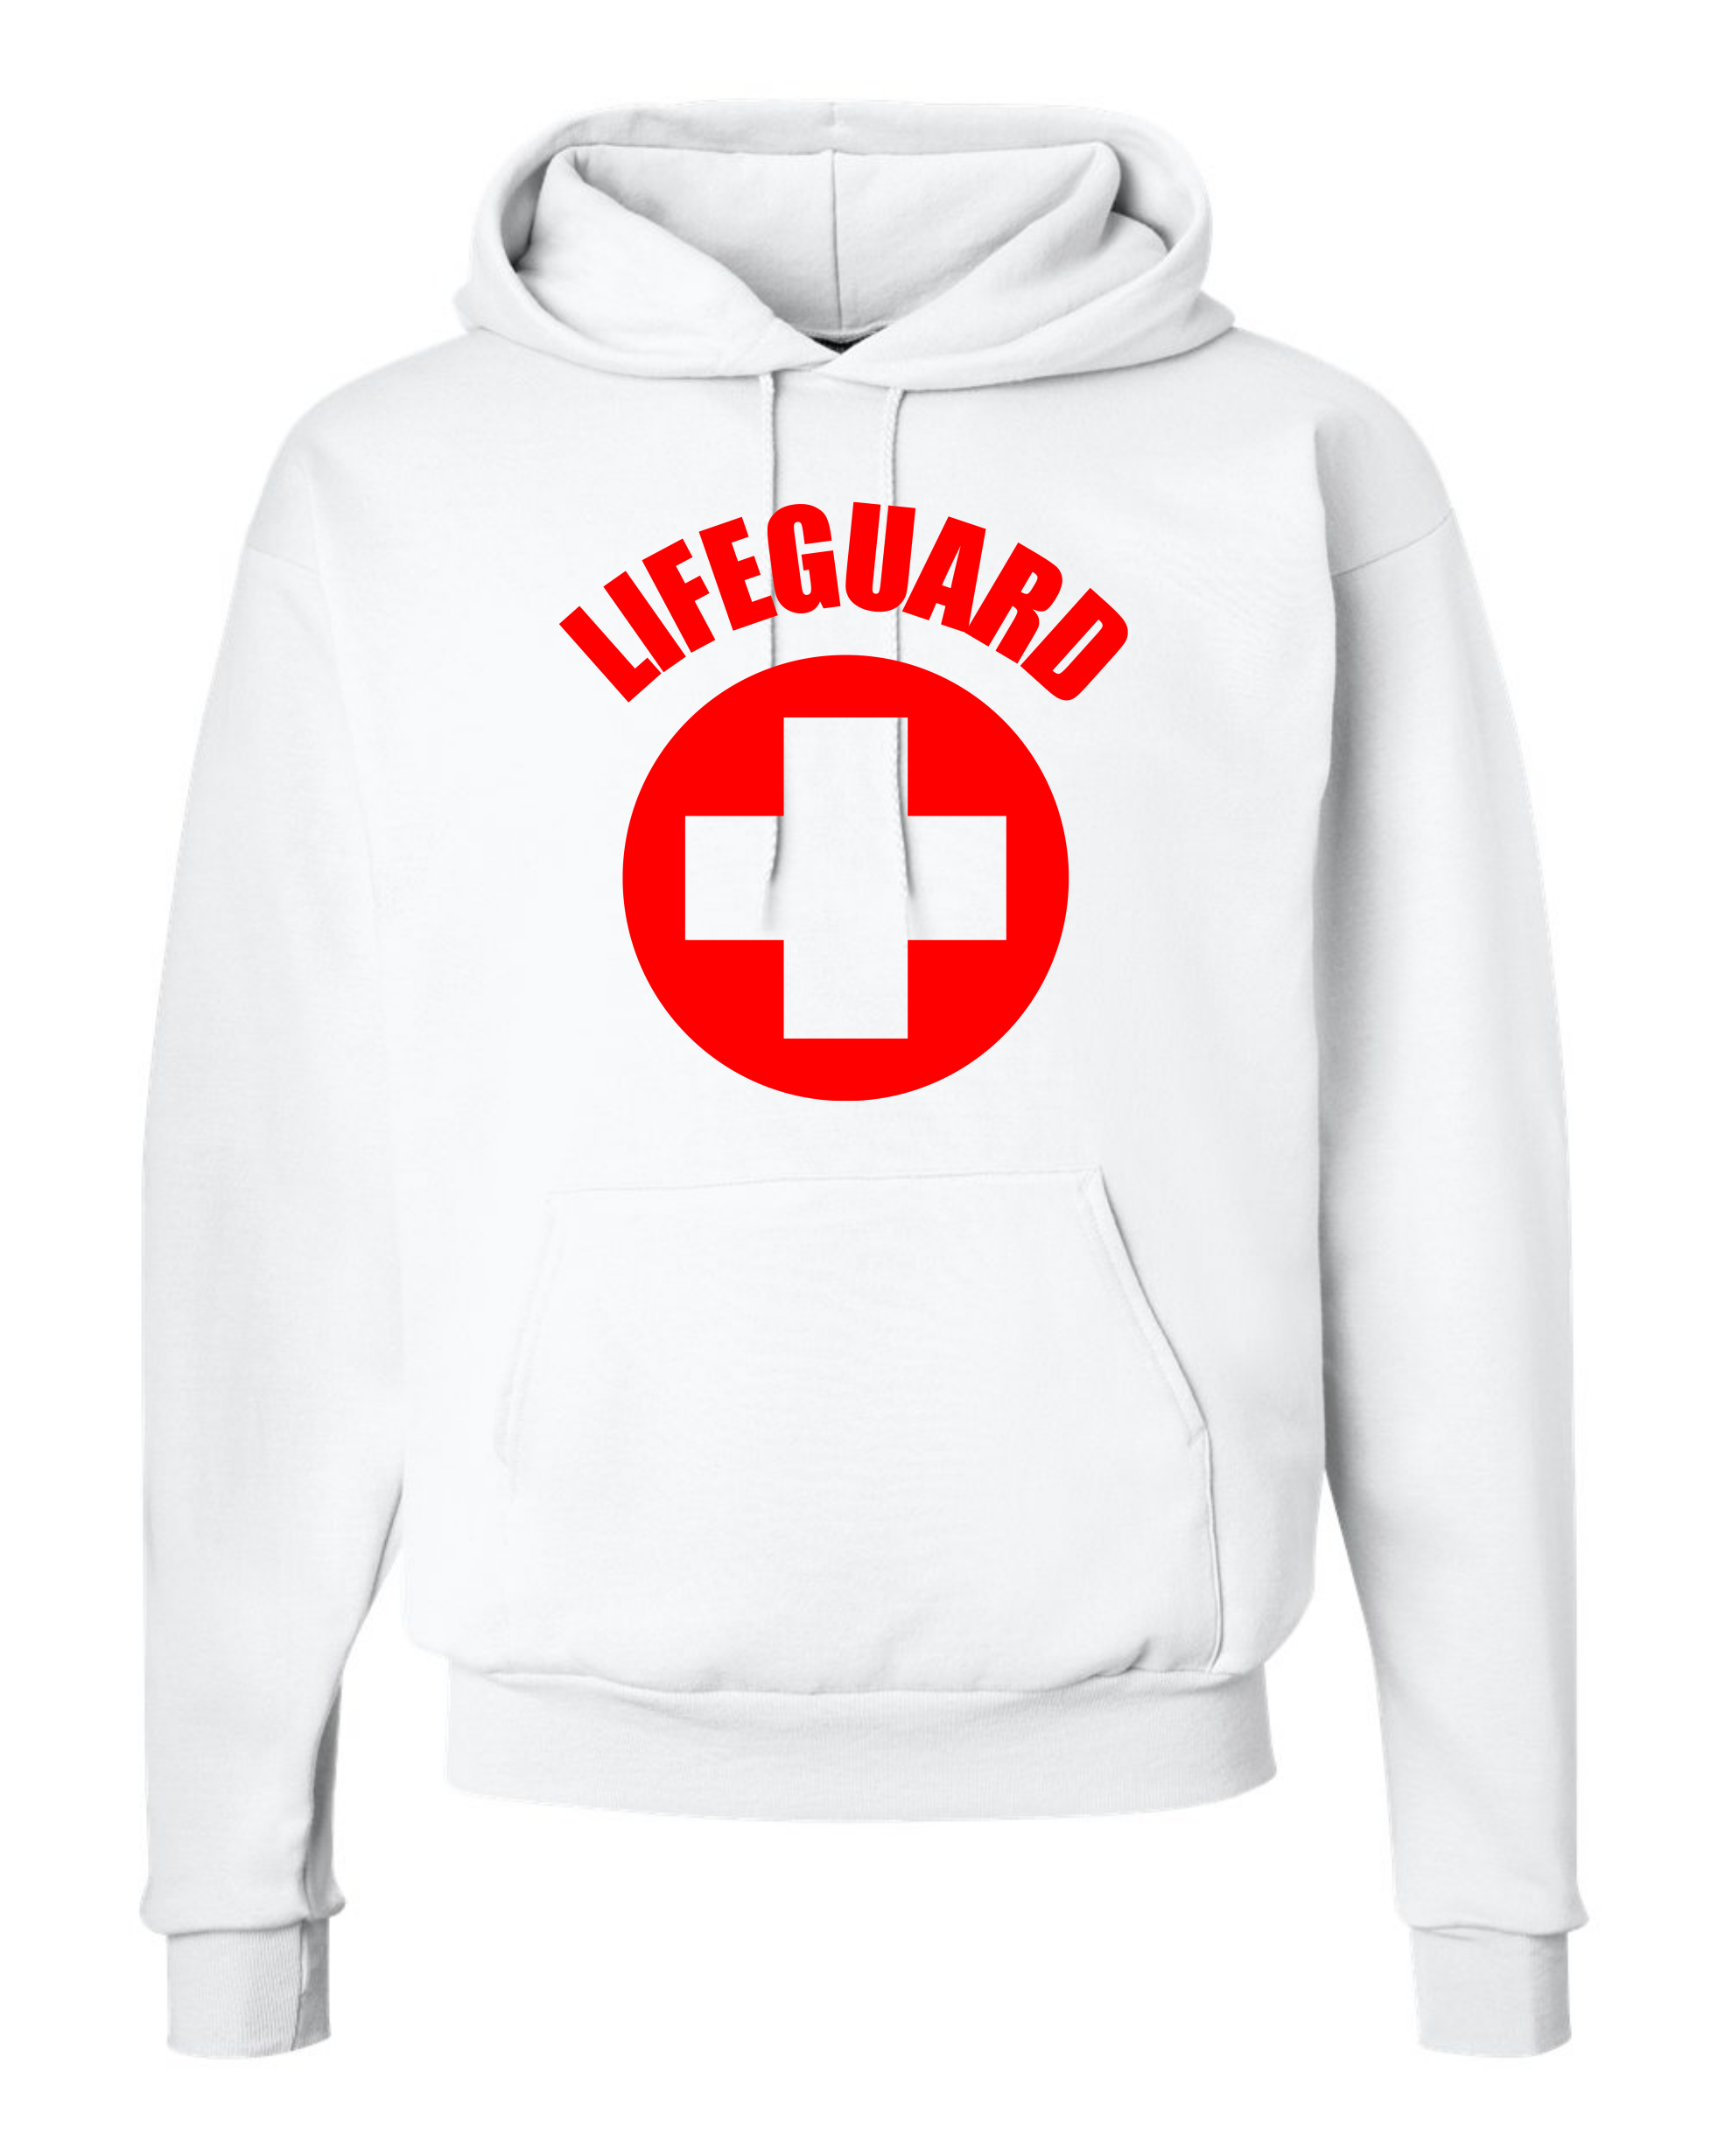 Lifeguard – Hoodie Sweatshirt (Round Logo) - Unique Country Store